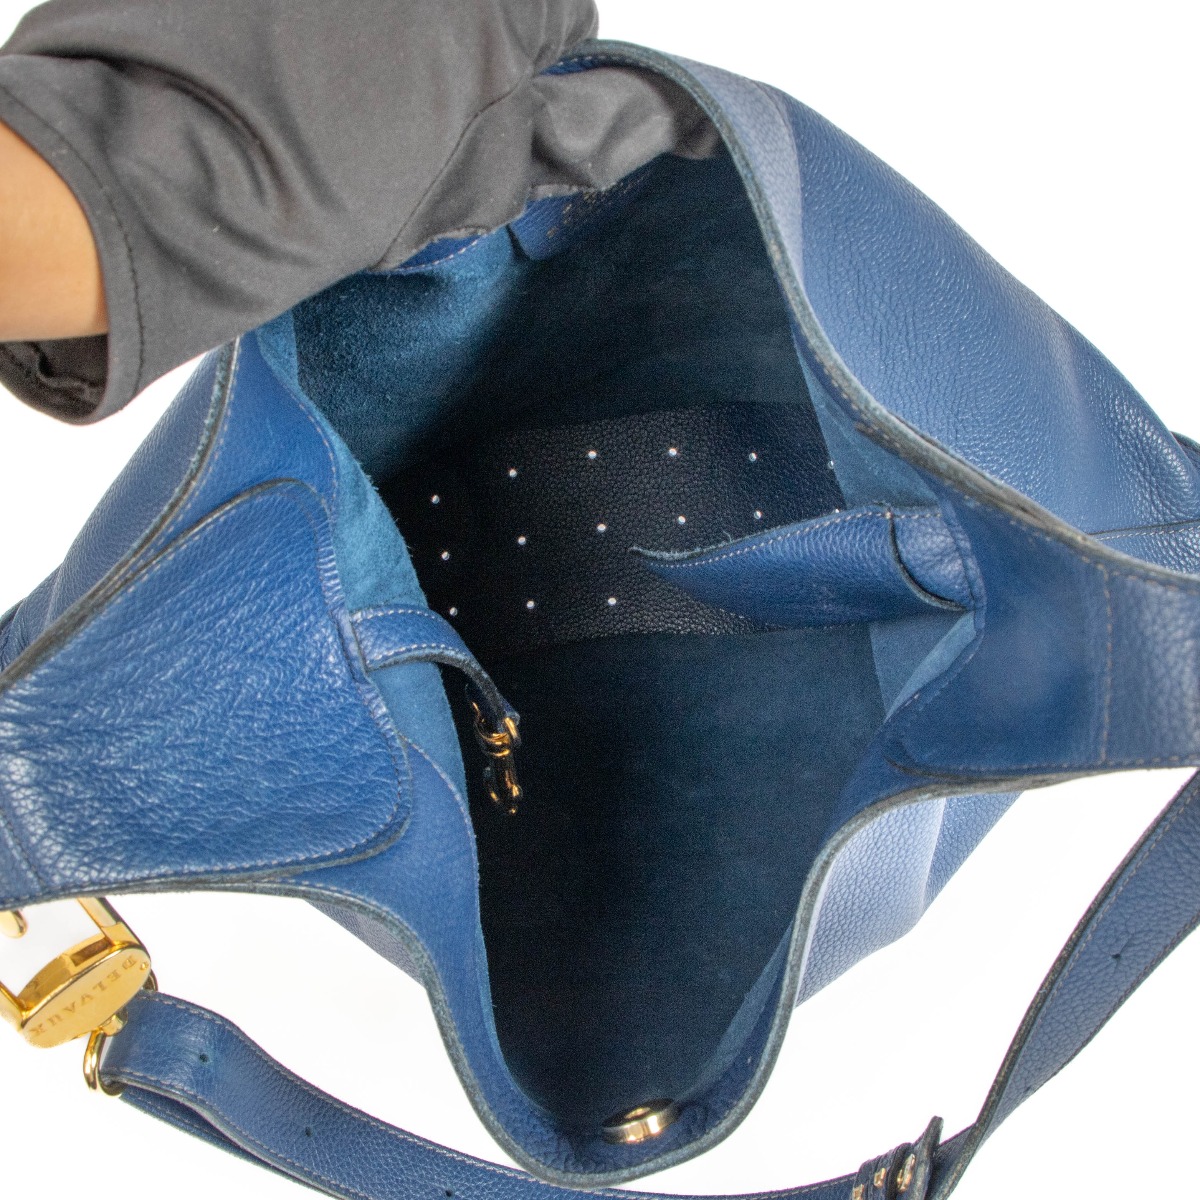 Handtas gemerkt Delvaux, donkerblauwe Pin Bag, model Satan